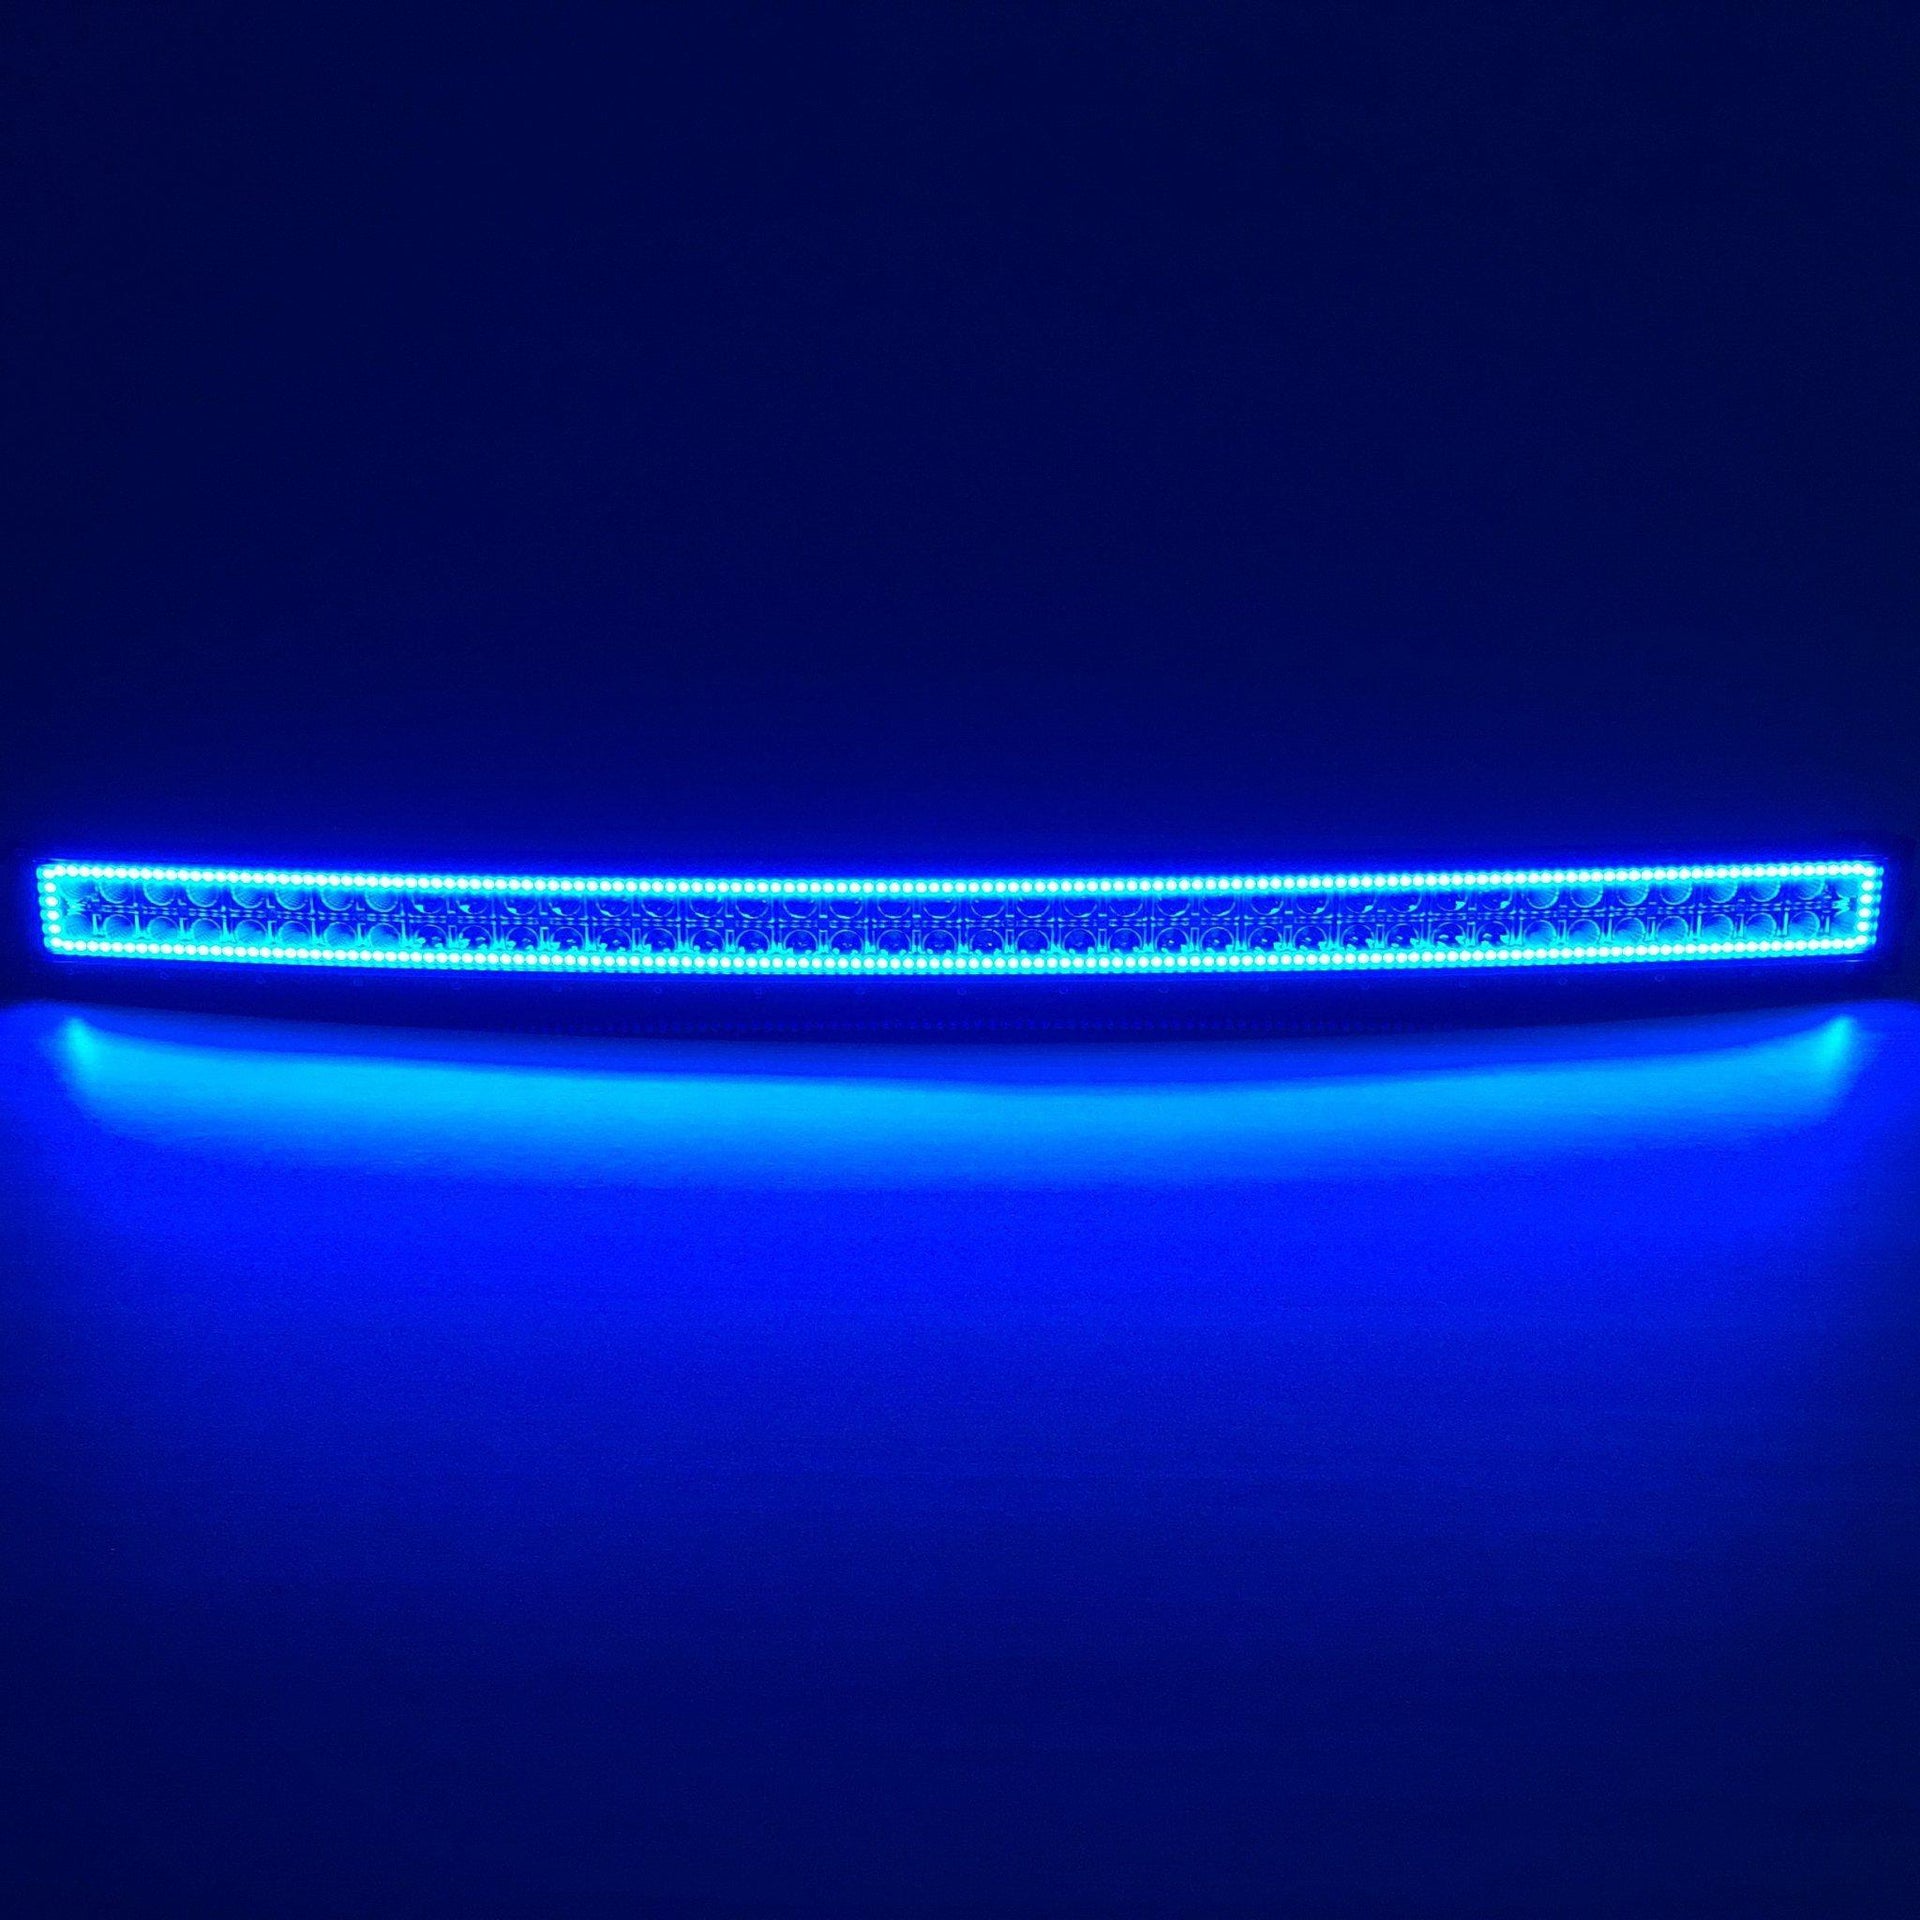 41.5" RGB Halo Curved Light Bar With Bluetooth Remote Control-RGB Halo Curved Light Bar-Vivid Light Bars